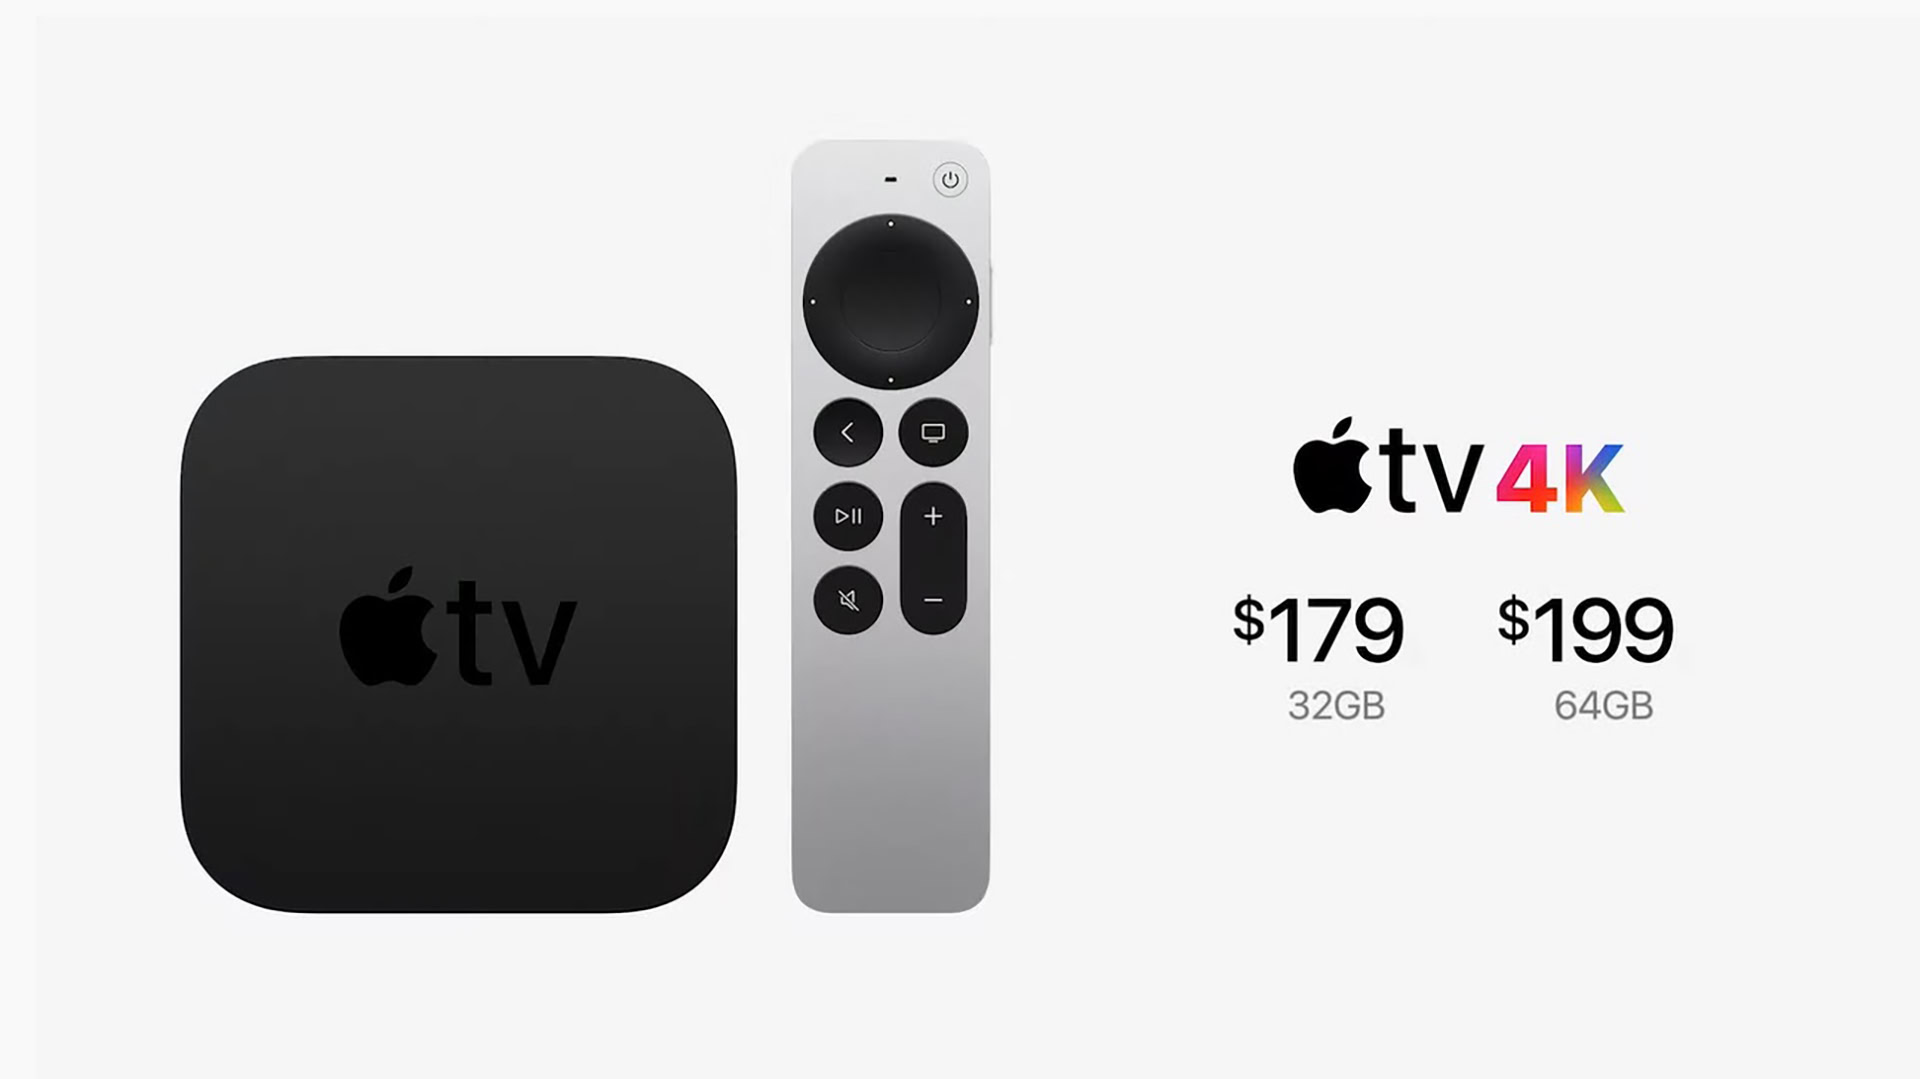 Apple April 2021 event Apple TV 4K